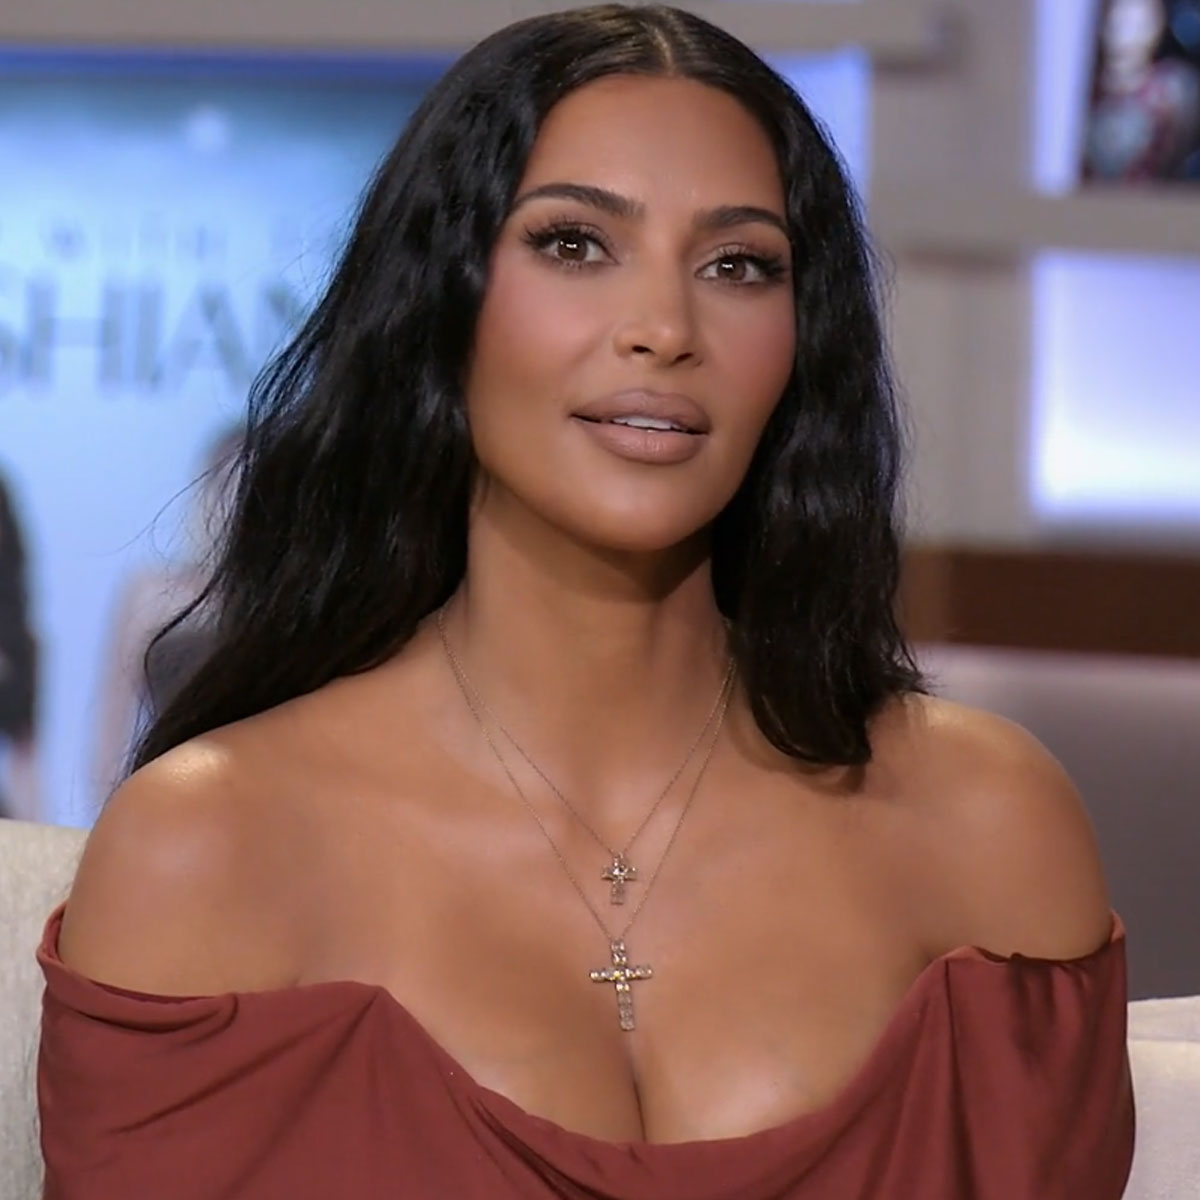 Celebrity Kim Kardashian Porn - Kim Kardashian Admits Infamous Sex Tape Helped Success of KUWTK - E! Online